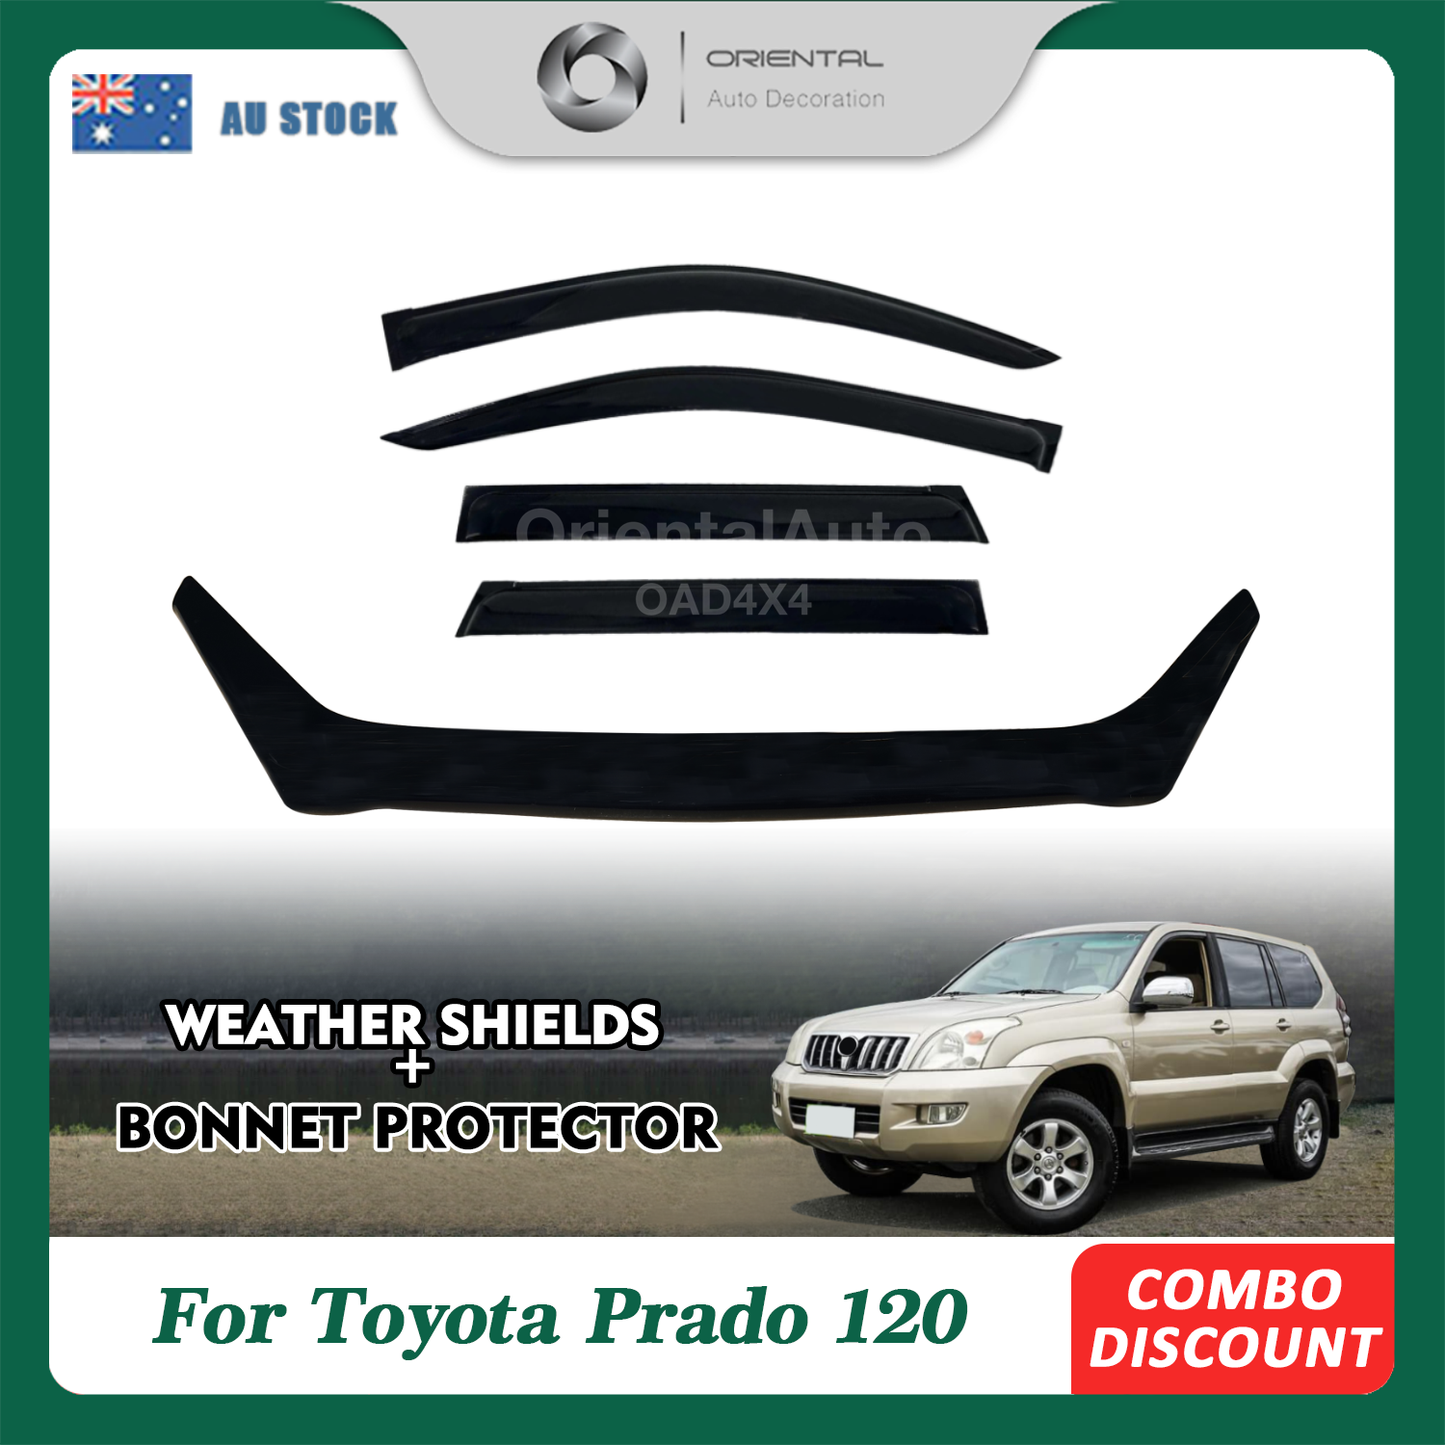 Bonnet Protector & Luxury Weathershields Weather Shields Window Visors for Toyota LandCruiser Prado 120 2003-2009